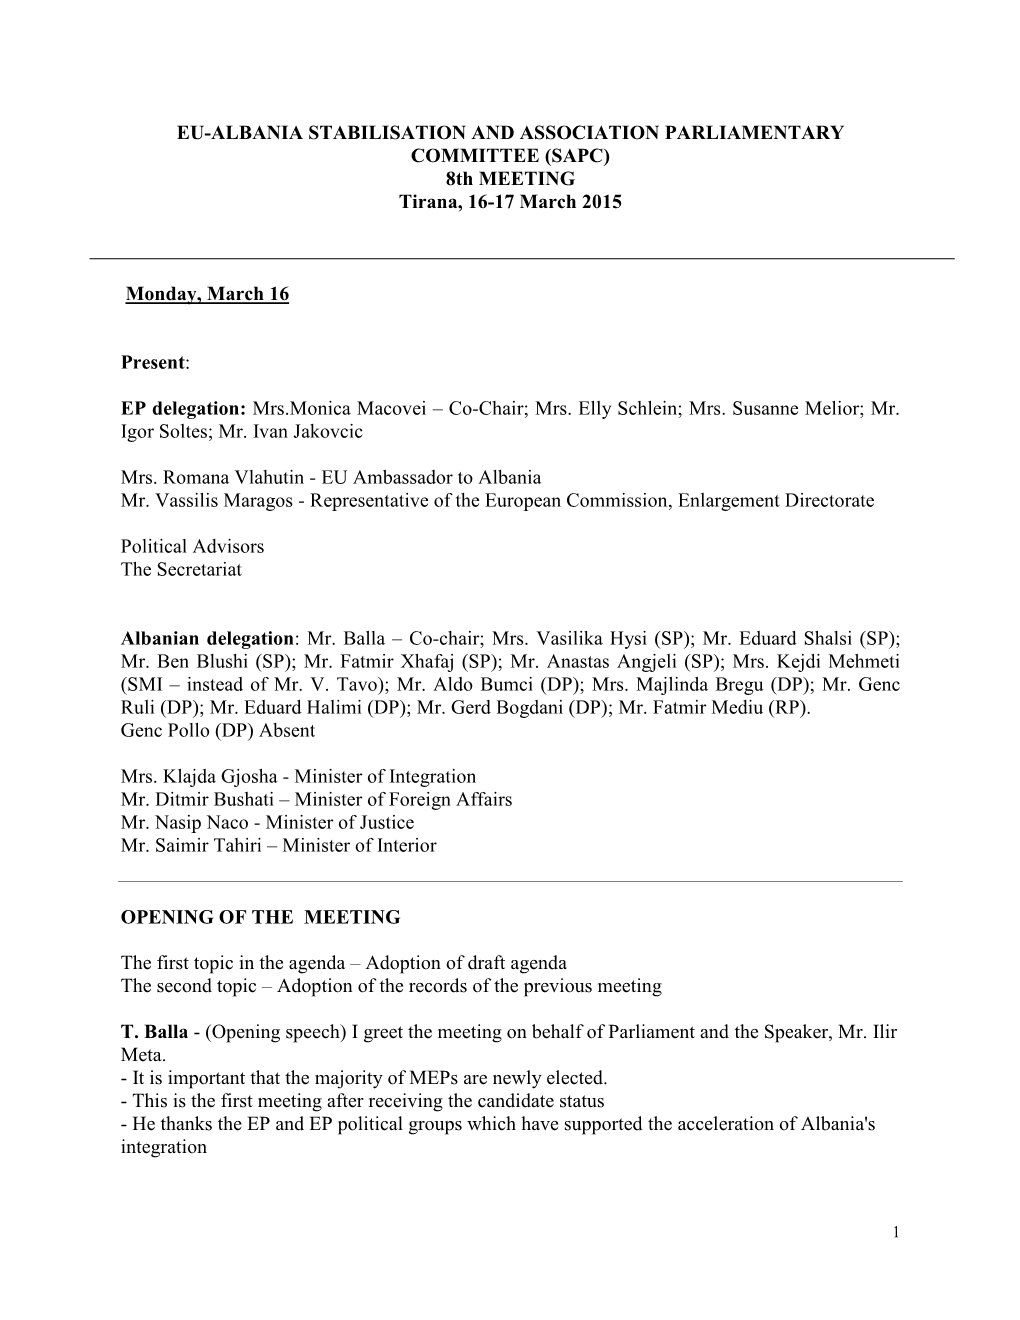 EU-ALBANIA STABILISATION and ASSOCIATION PARLIAMENTARY COMMITTEE (SAPC) 8Th MEETING Tirana, 16-17 March 2015